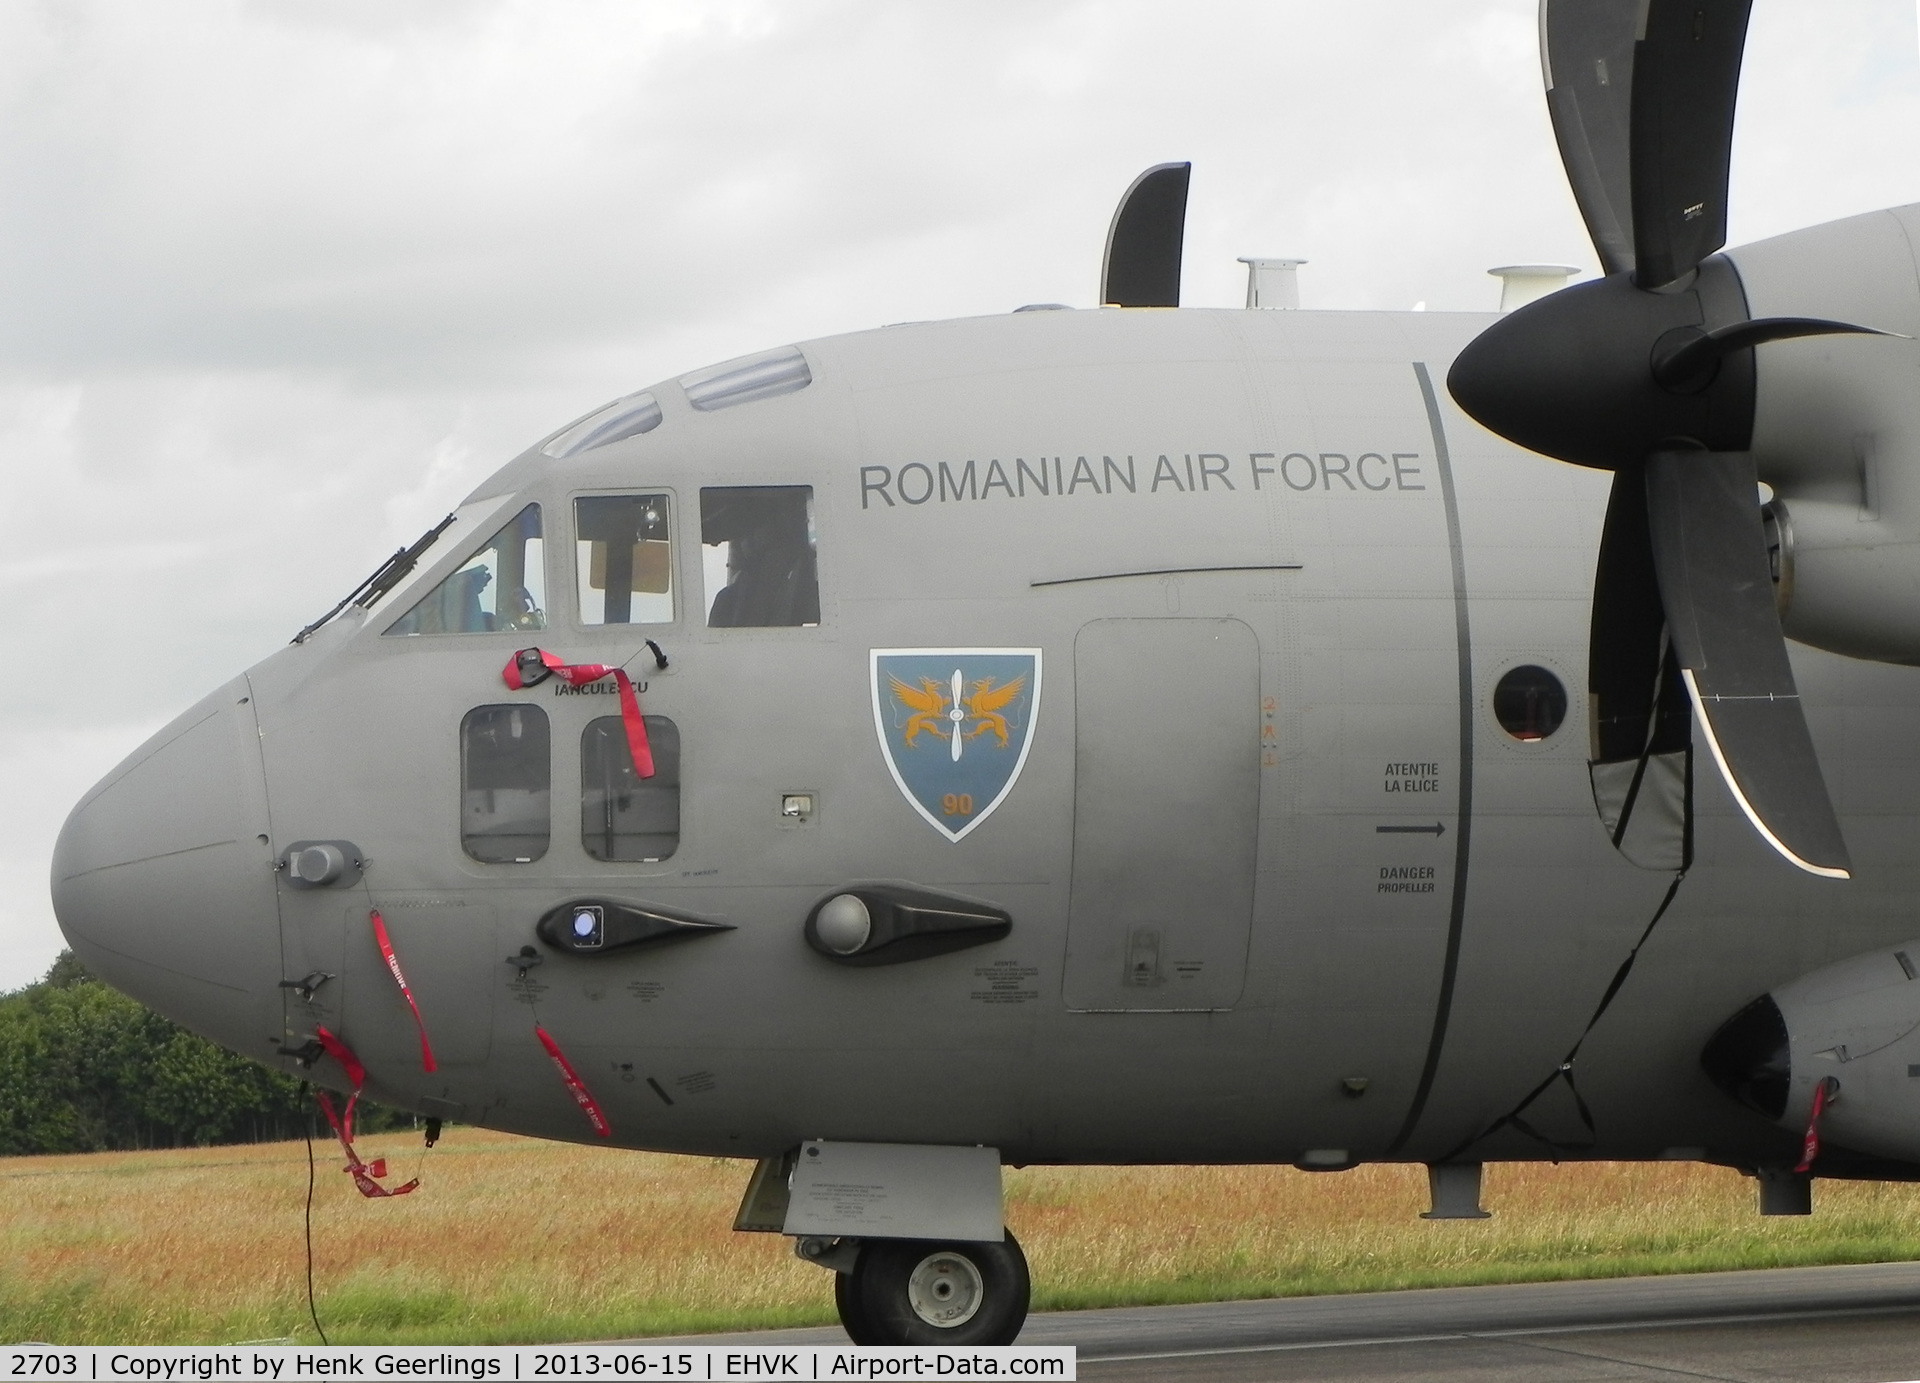 2703, 2008 Alenia HC-27J Spartan C/N 4148, Airforcedays , 14/15 June 2013 at Volkel AFB ; Romanian AF